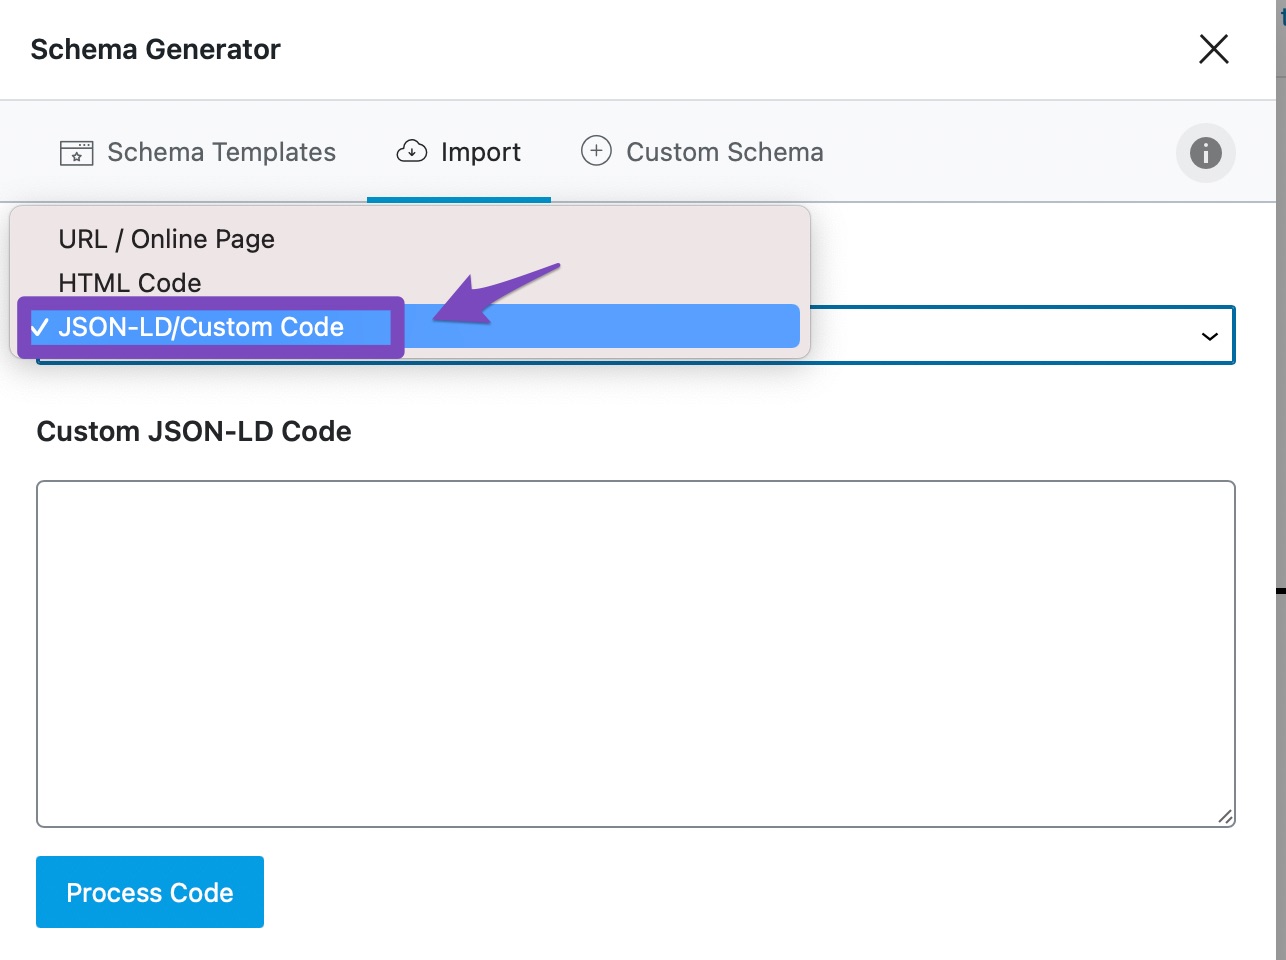 Select JSON-LD/Custom Code option